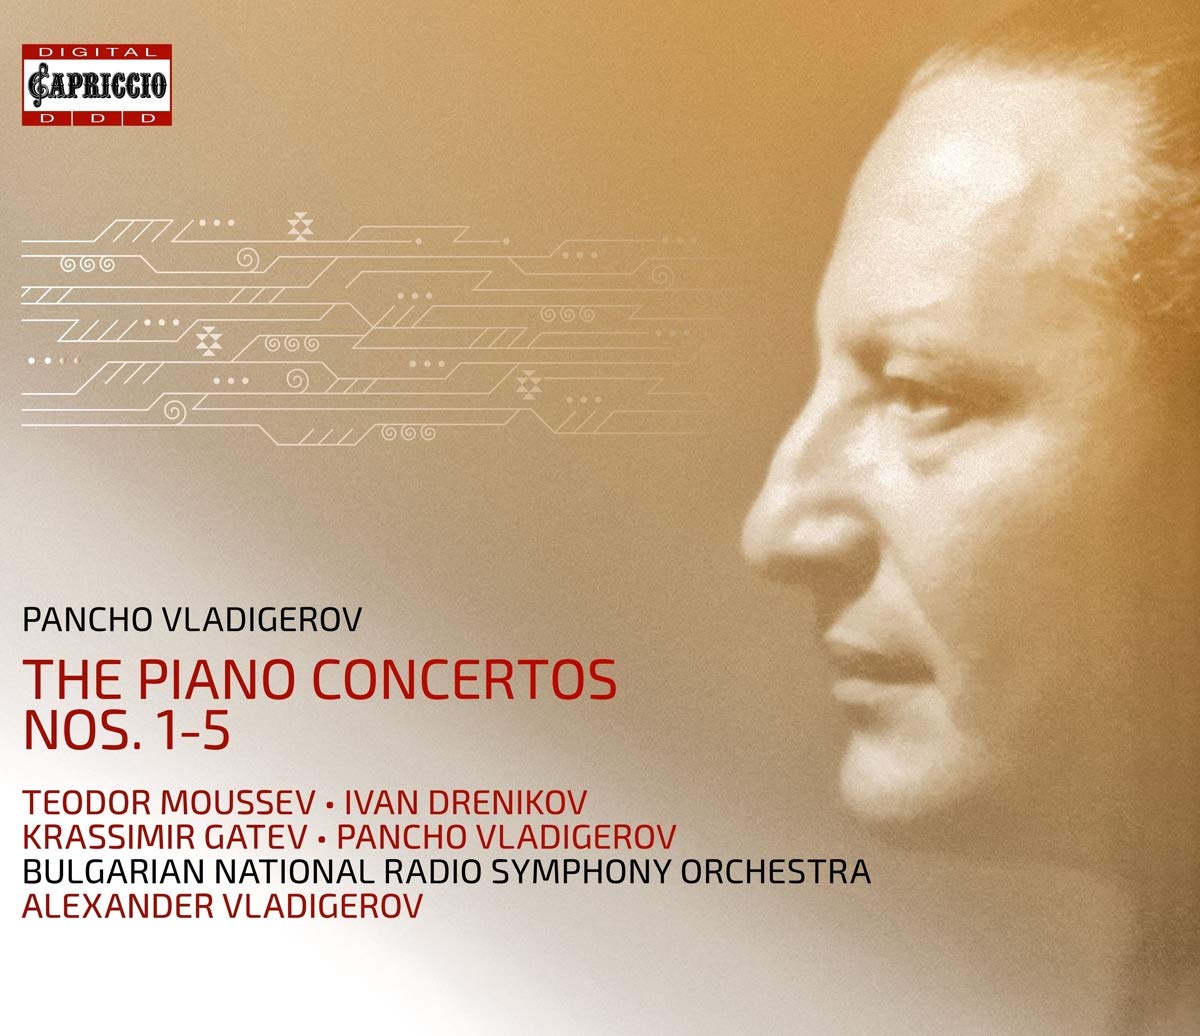 Audio Cd Pancho Vladigerov - The Piano Concertos Nos. 1-5 (2 Cd) NUOVO SIGILLATO, EDIZIONE DEL 03/07/2020 SUBITO DISPONIBILE